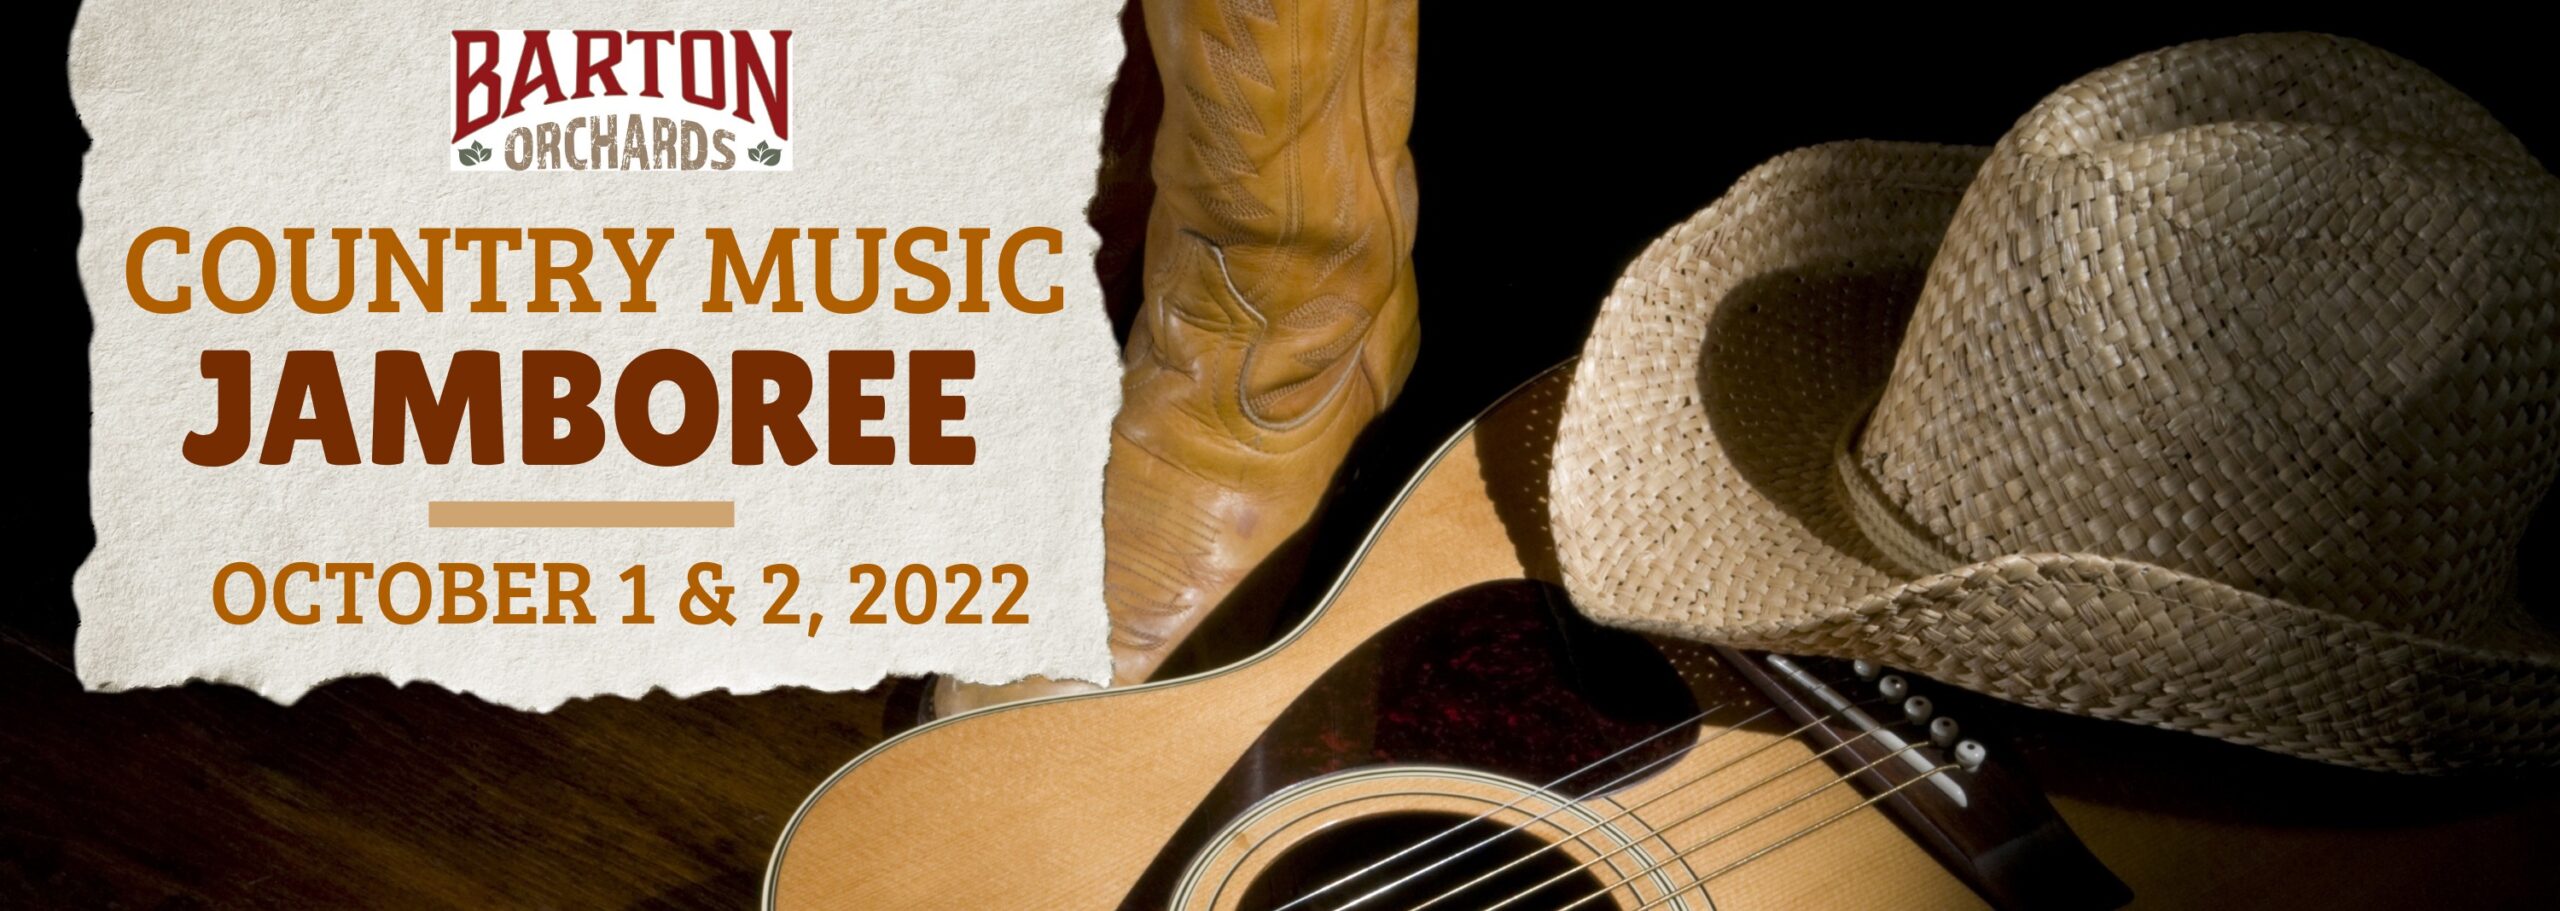 Country Music Jamboree Oct 1-2 at Barton Orchards